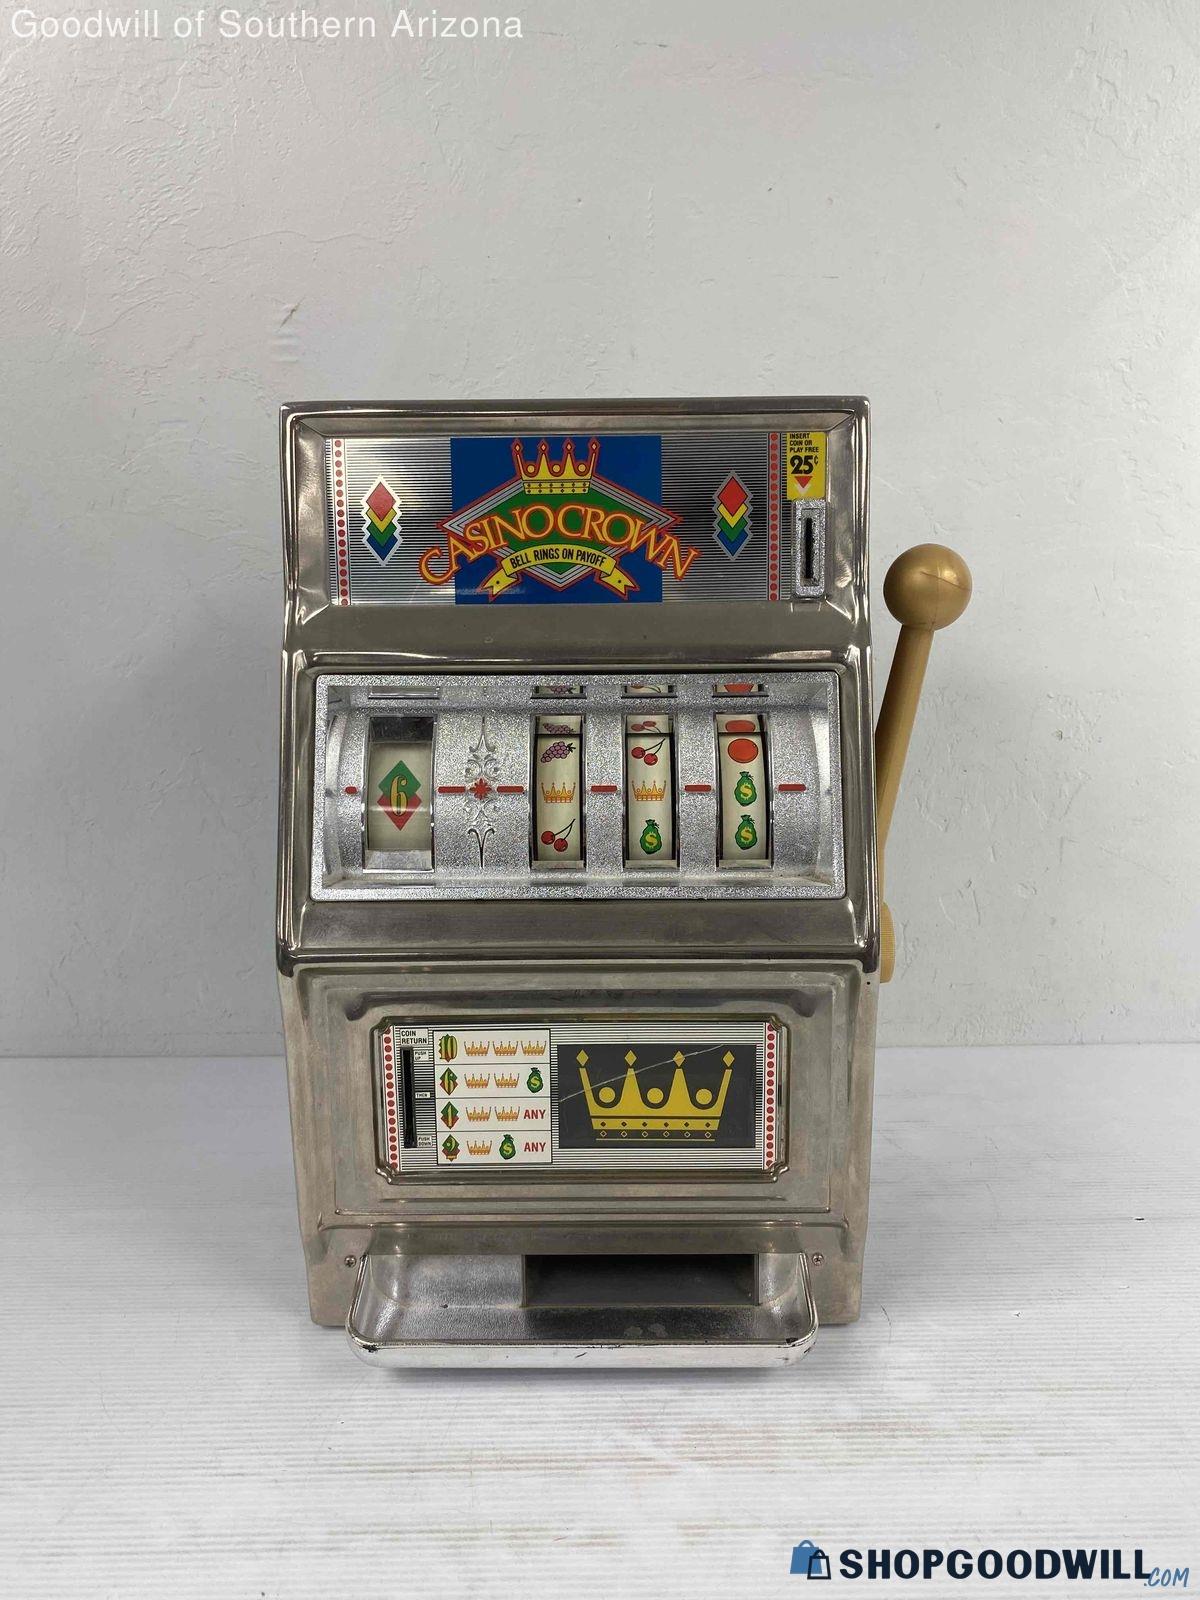 weco casino crown slot machine manufacture date